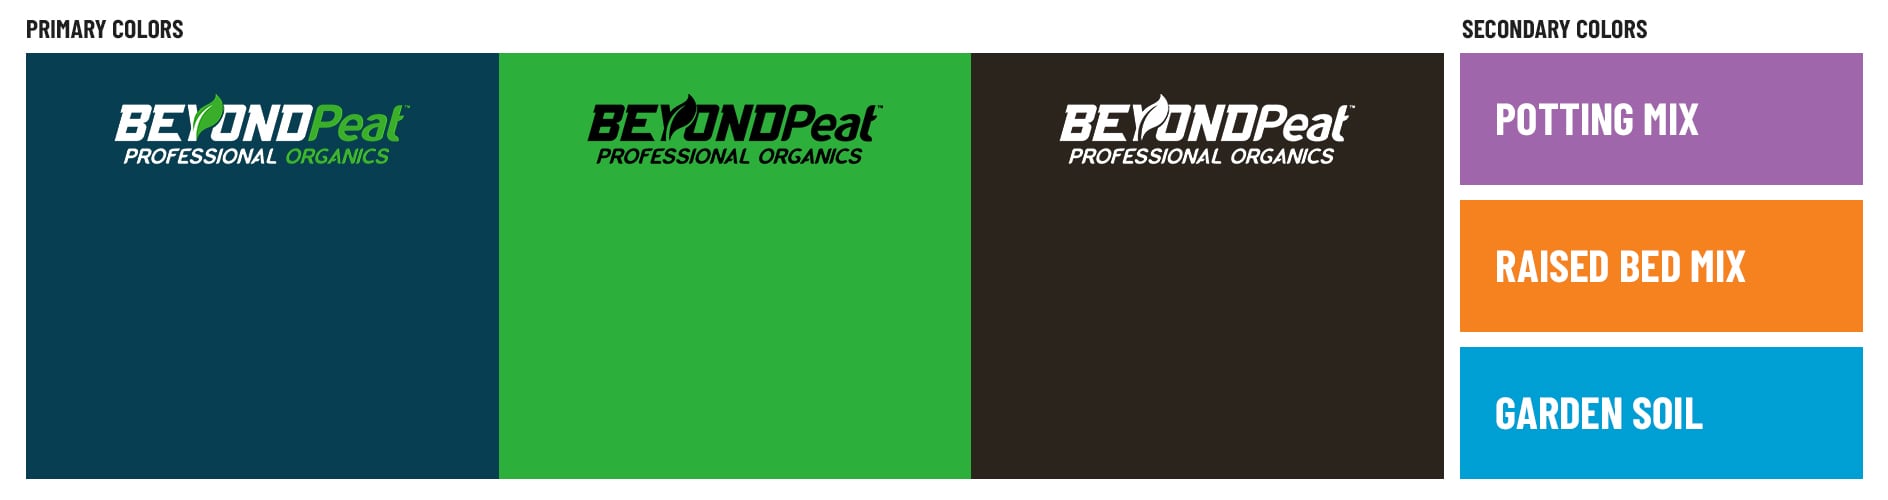 Beyond Peat Brand Colors